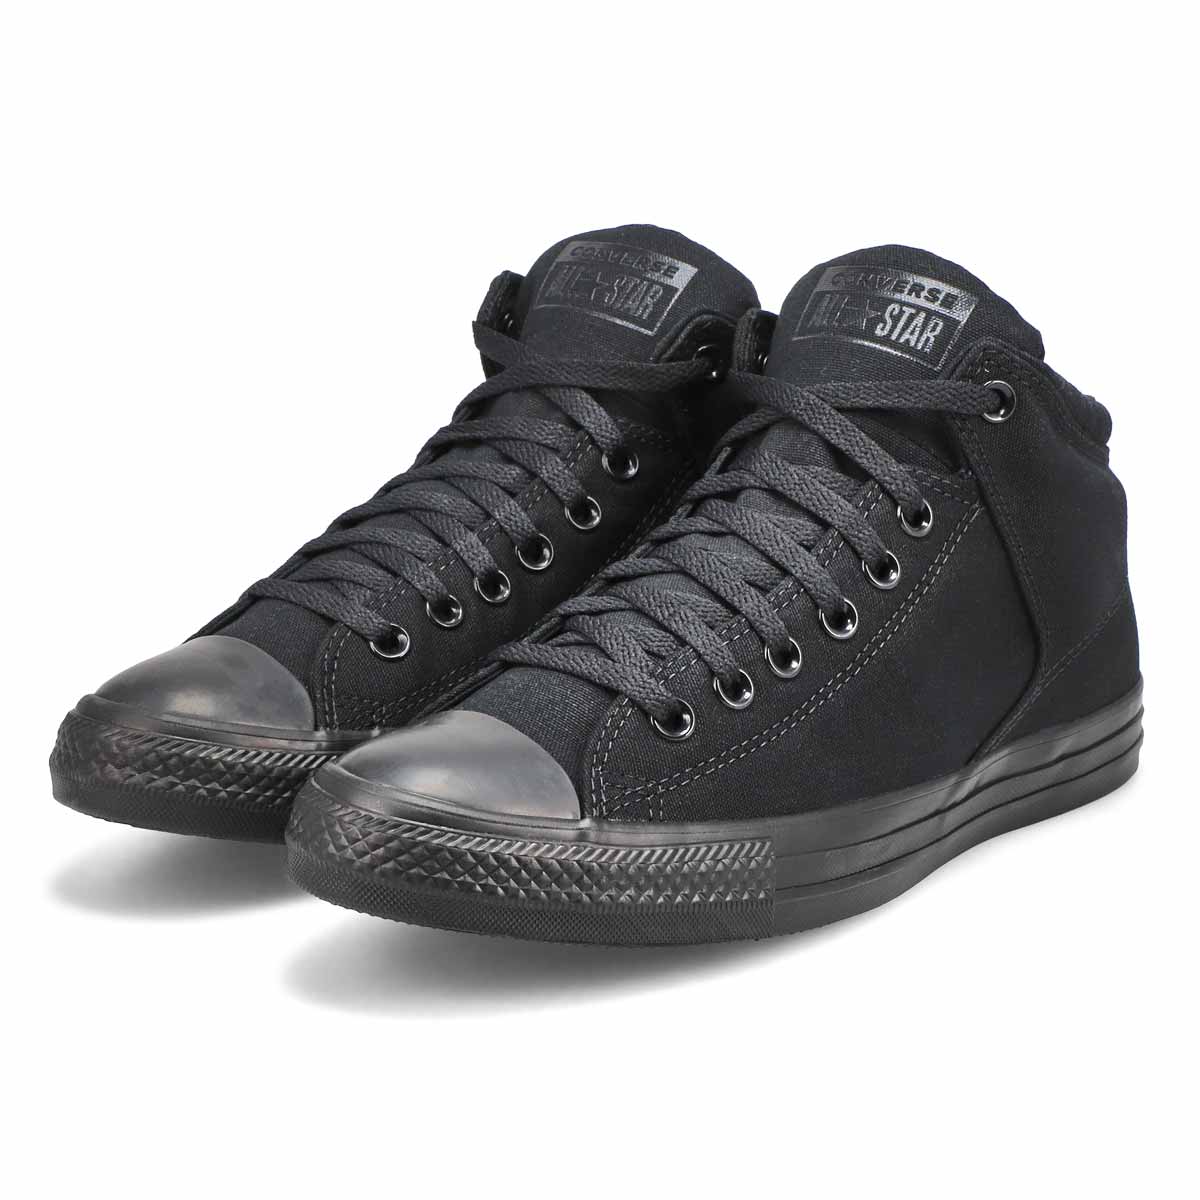 Men's Chuck Taylor All Star High Street Sneaker - Black/Black